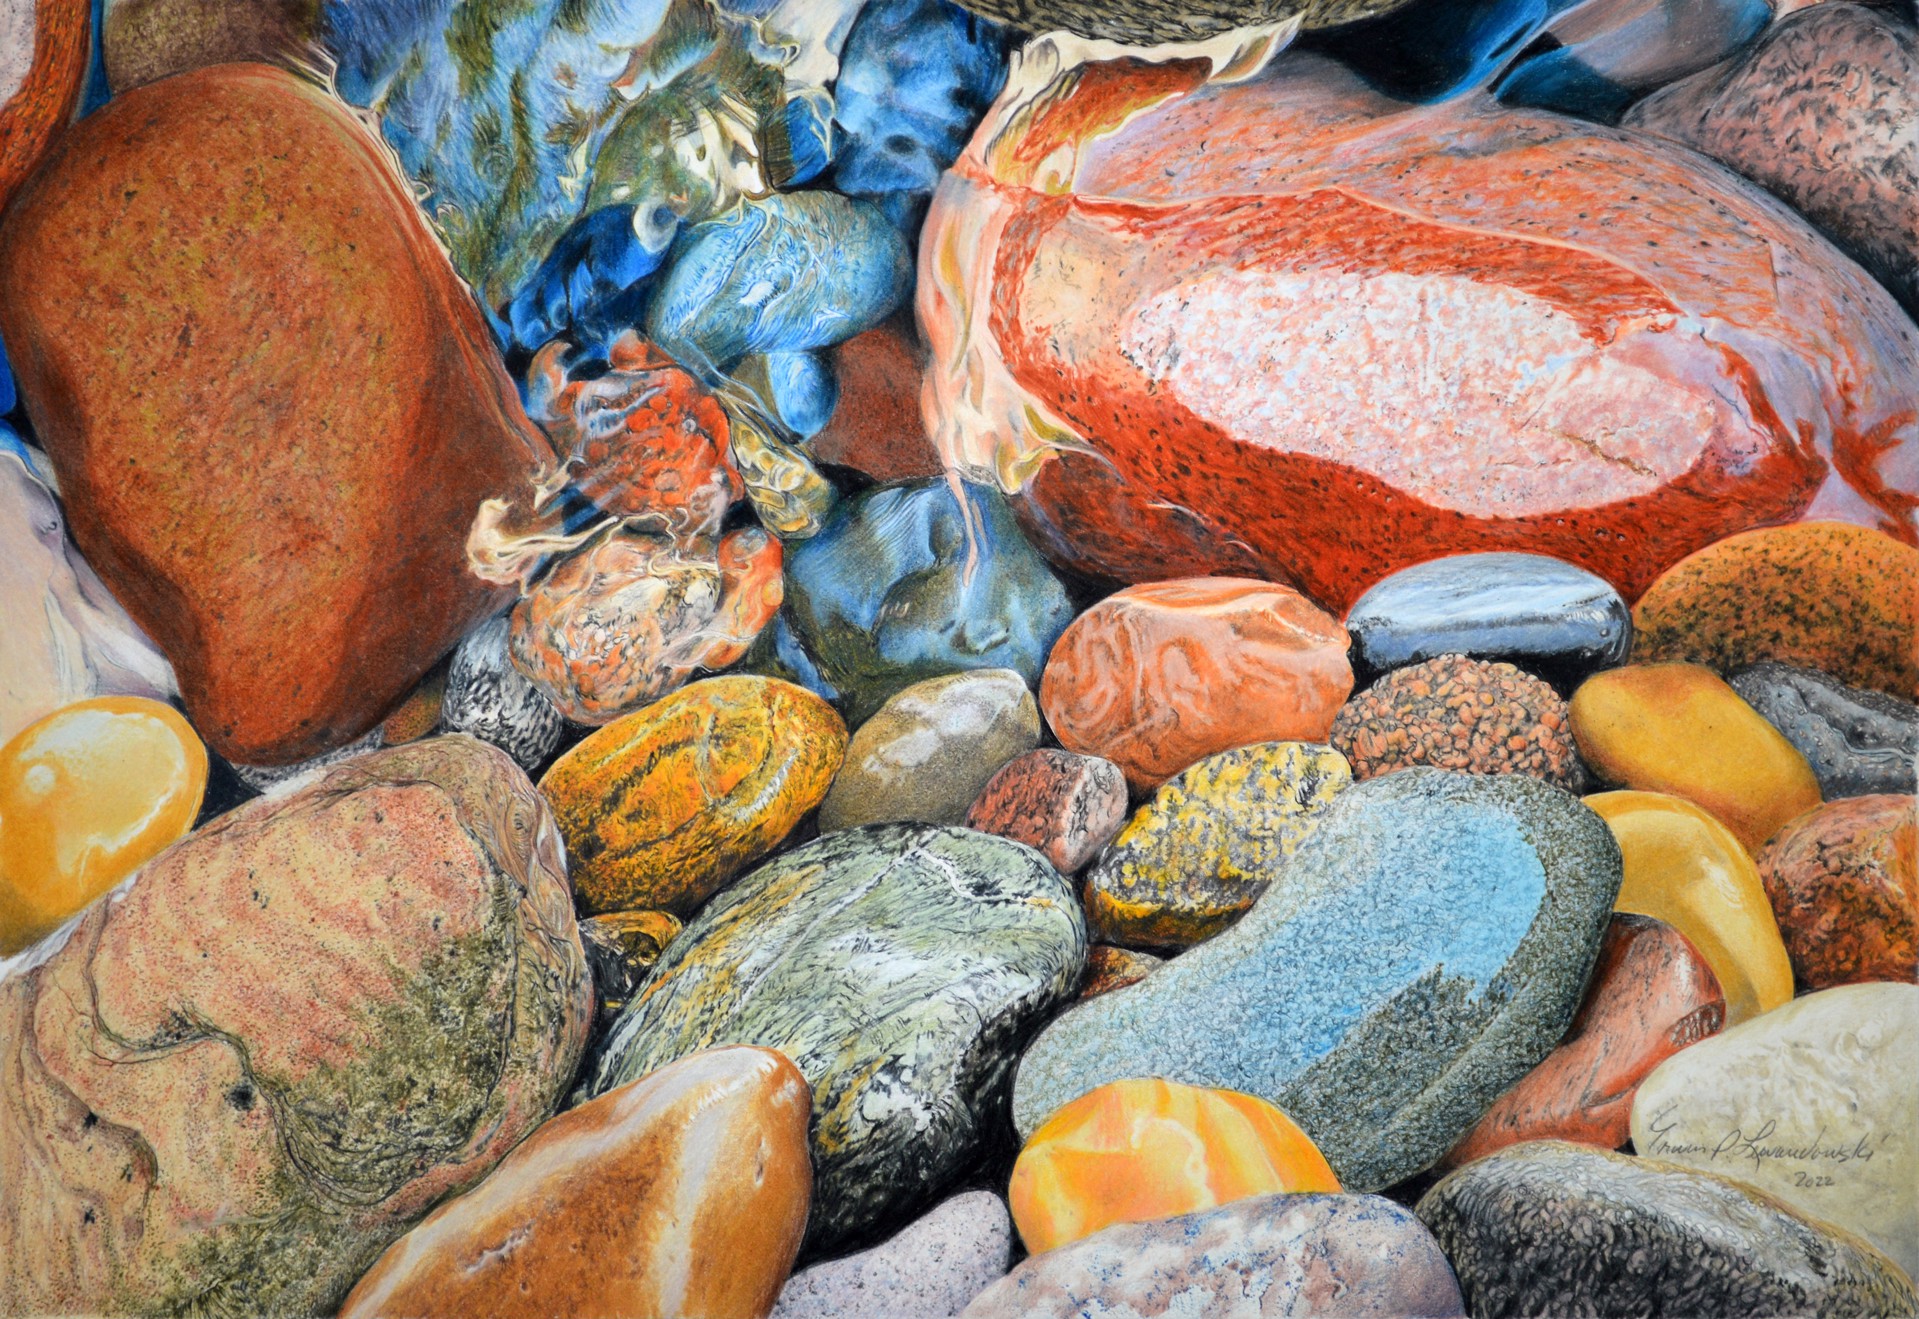 Lake Huron Rock Collection II by Erwin Lewandowski